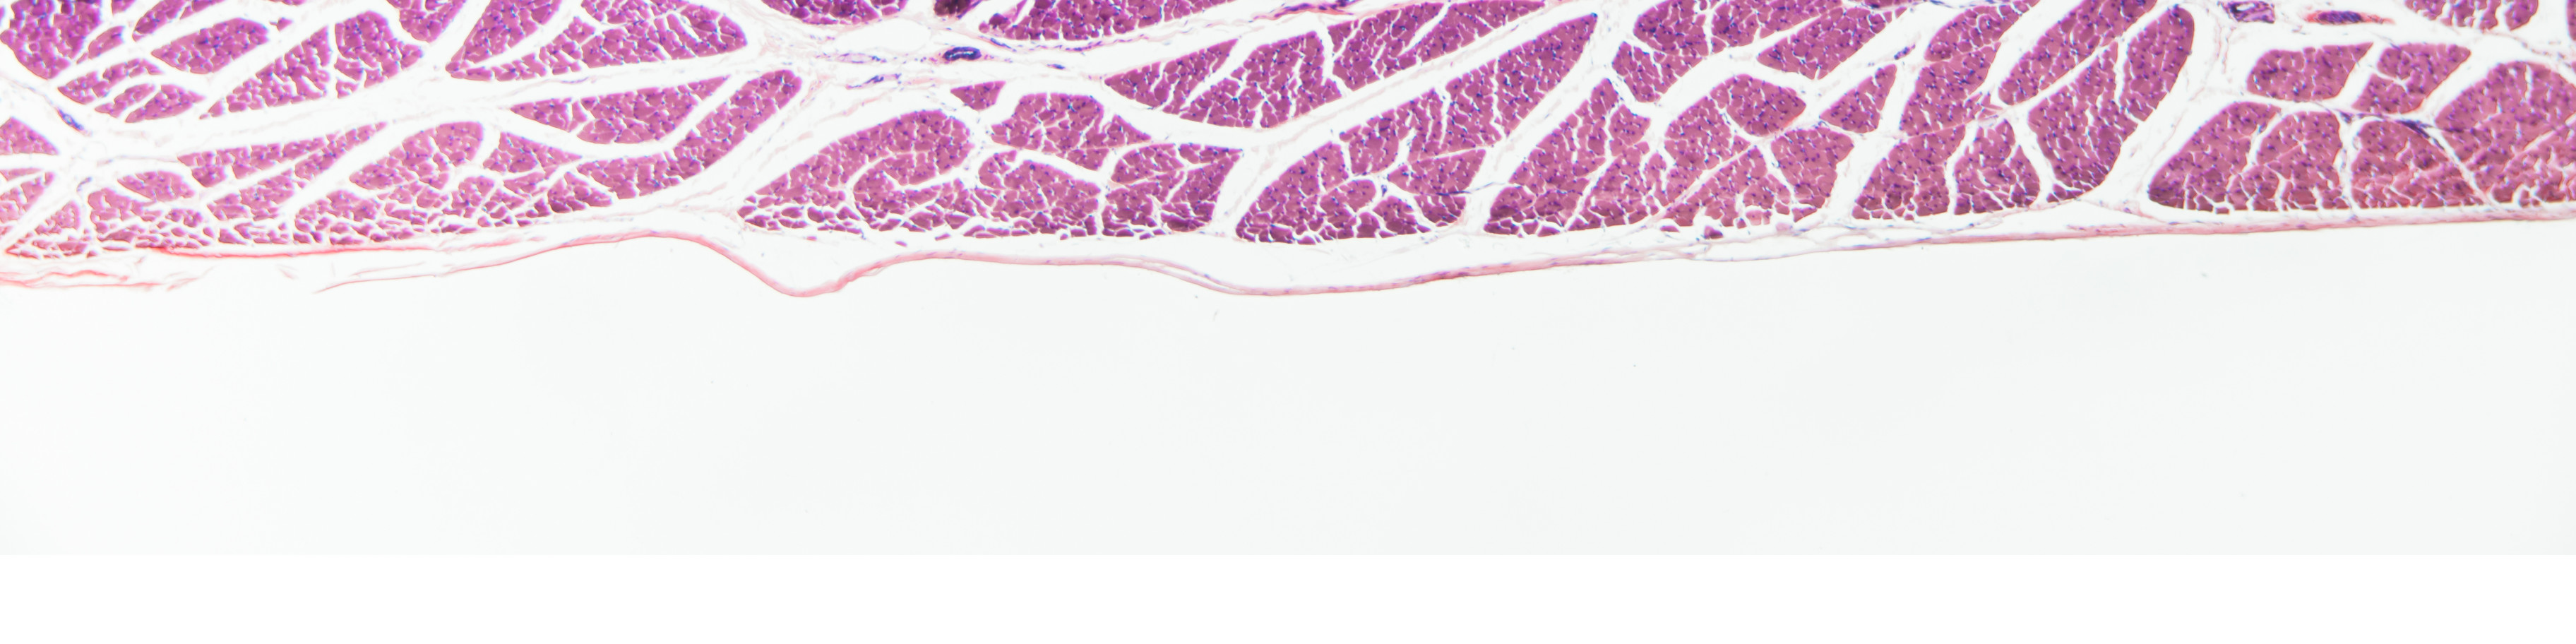 Pink muscle fibers